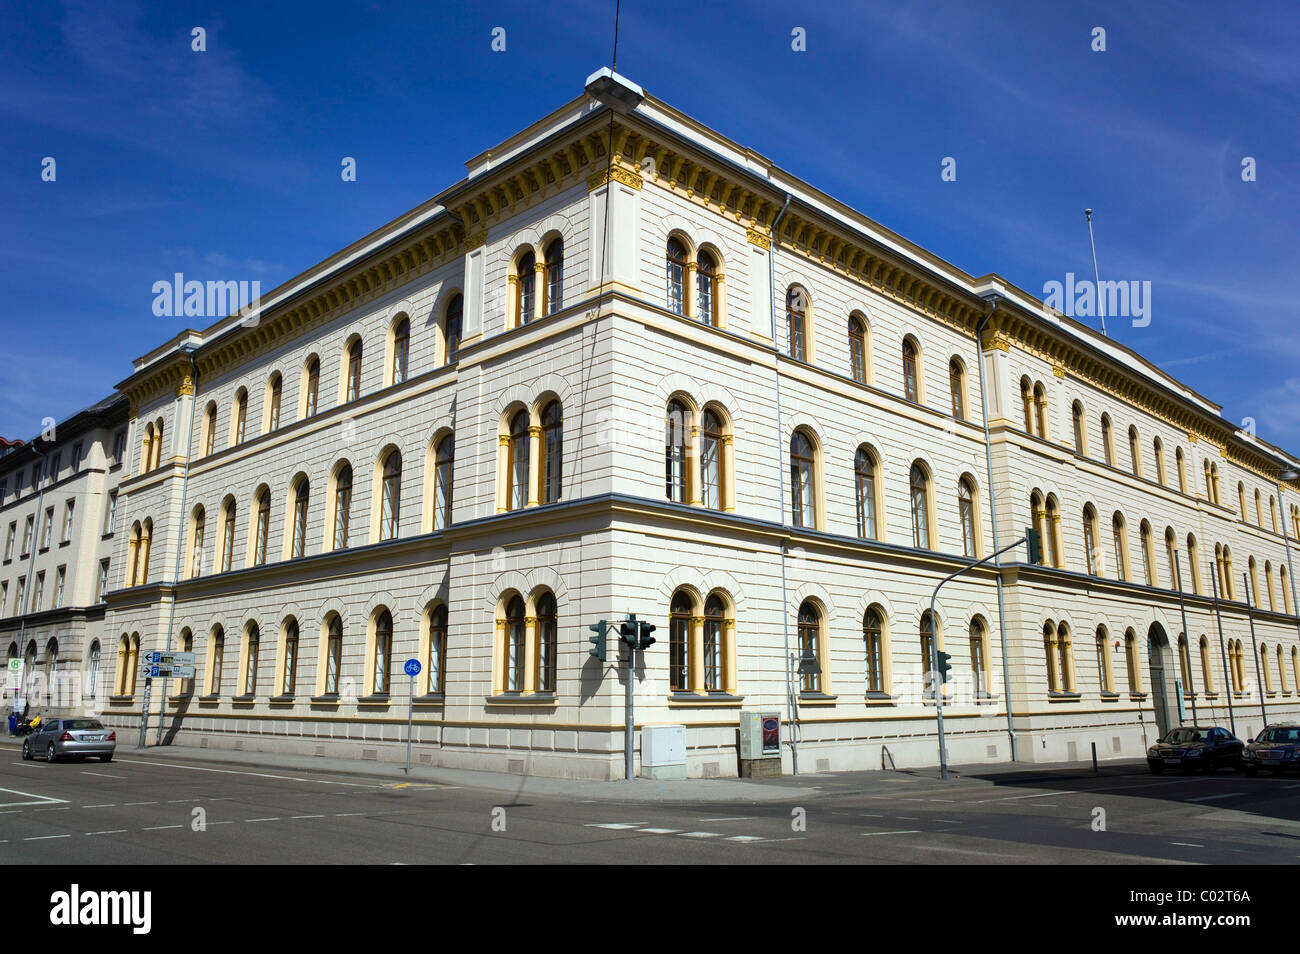 Hessian Ministerio de Justicia e integración y Europa, Wiesbaden, Hesse, Alemania, Europa Foto de stock